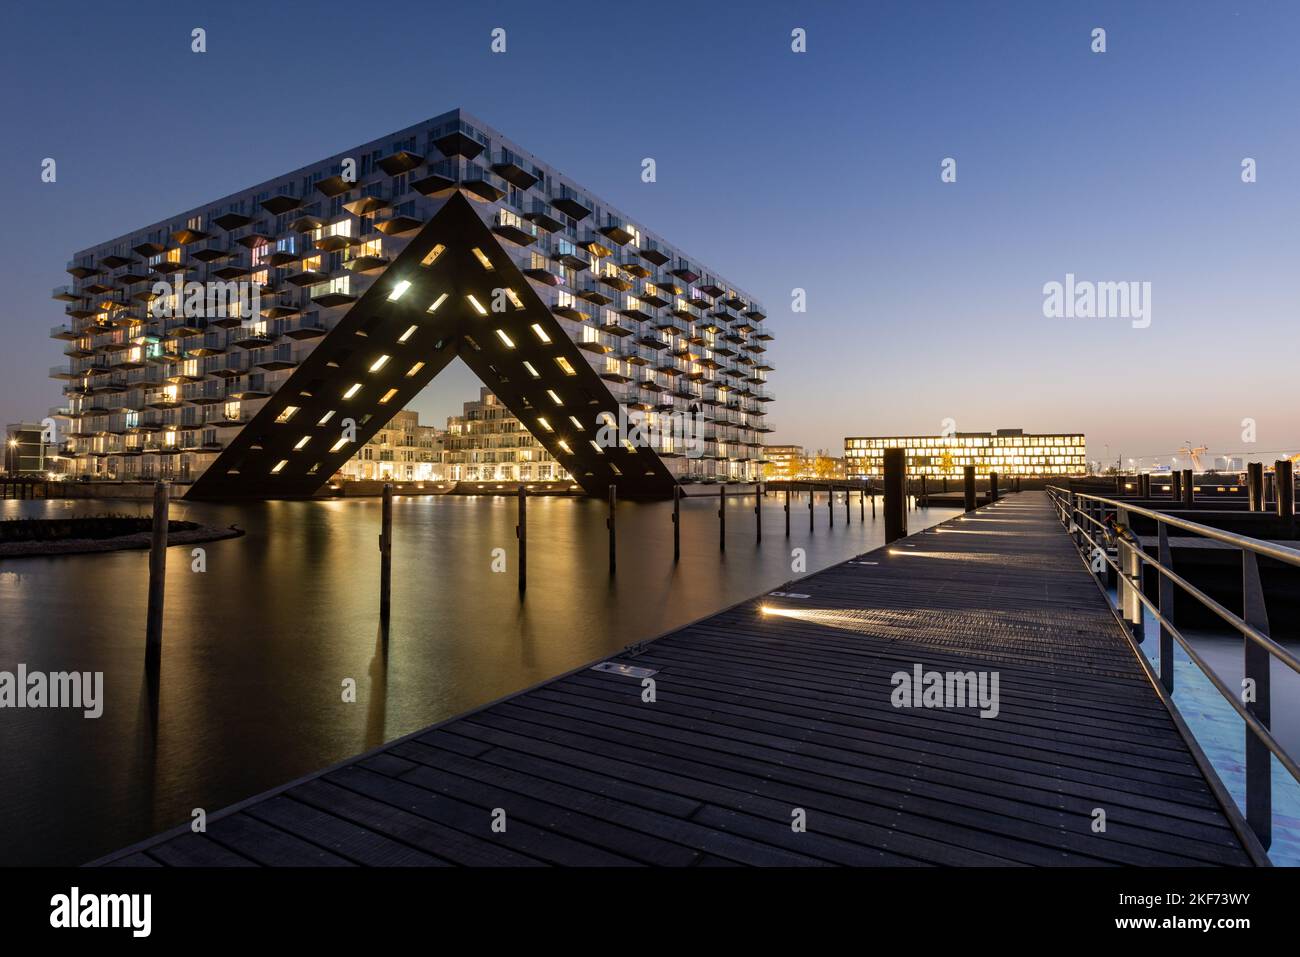 AMSTERDAM, THE NETHERLANDS - NOVEMBER 14, 2022: Modern apartment ...